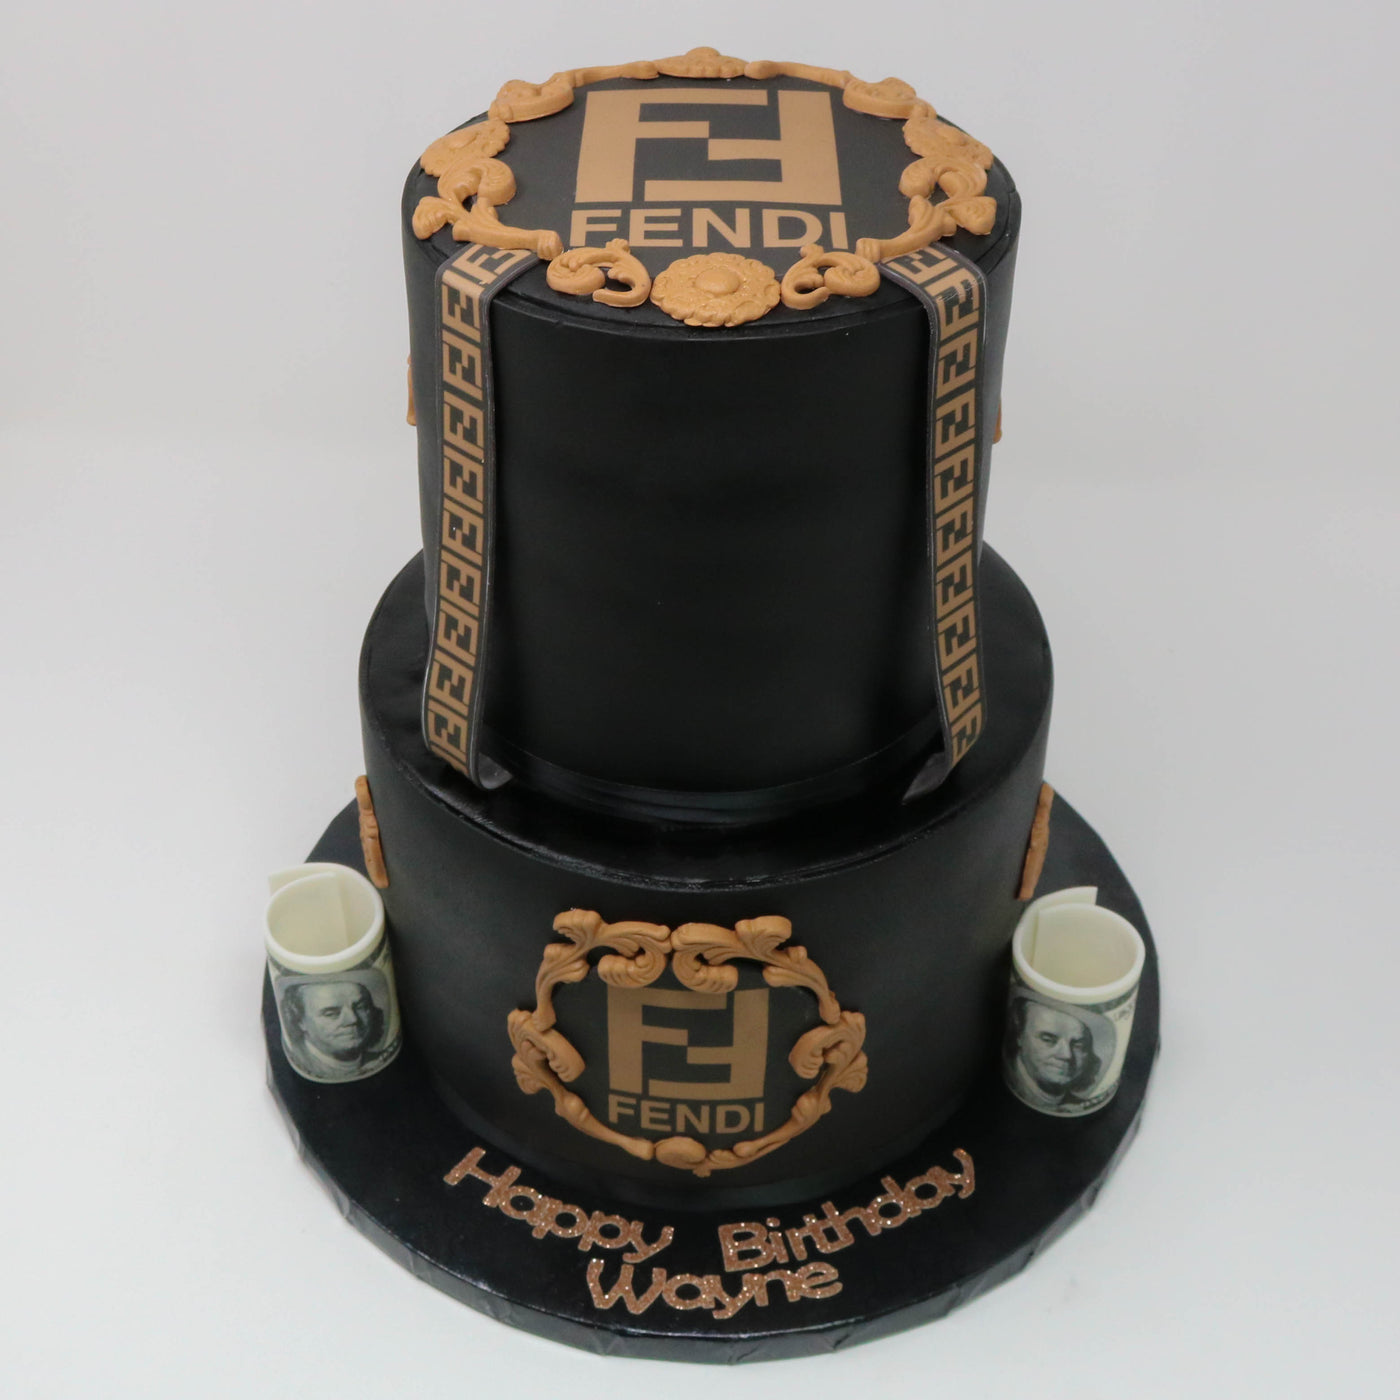 Fendi Money Cake